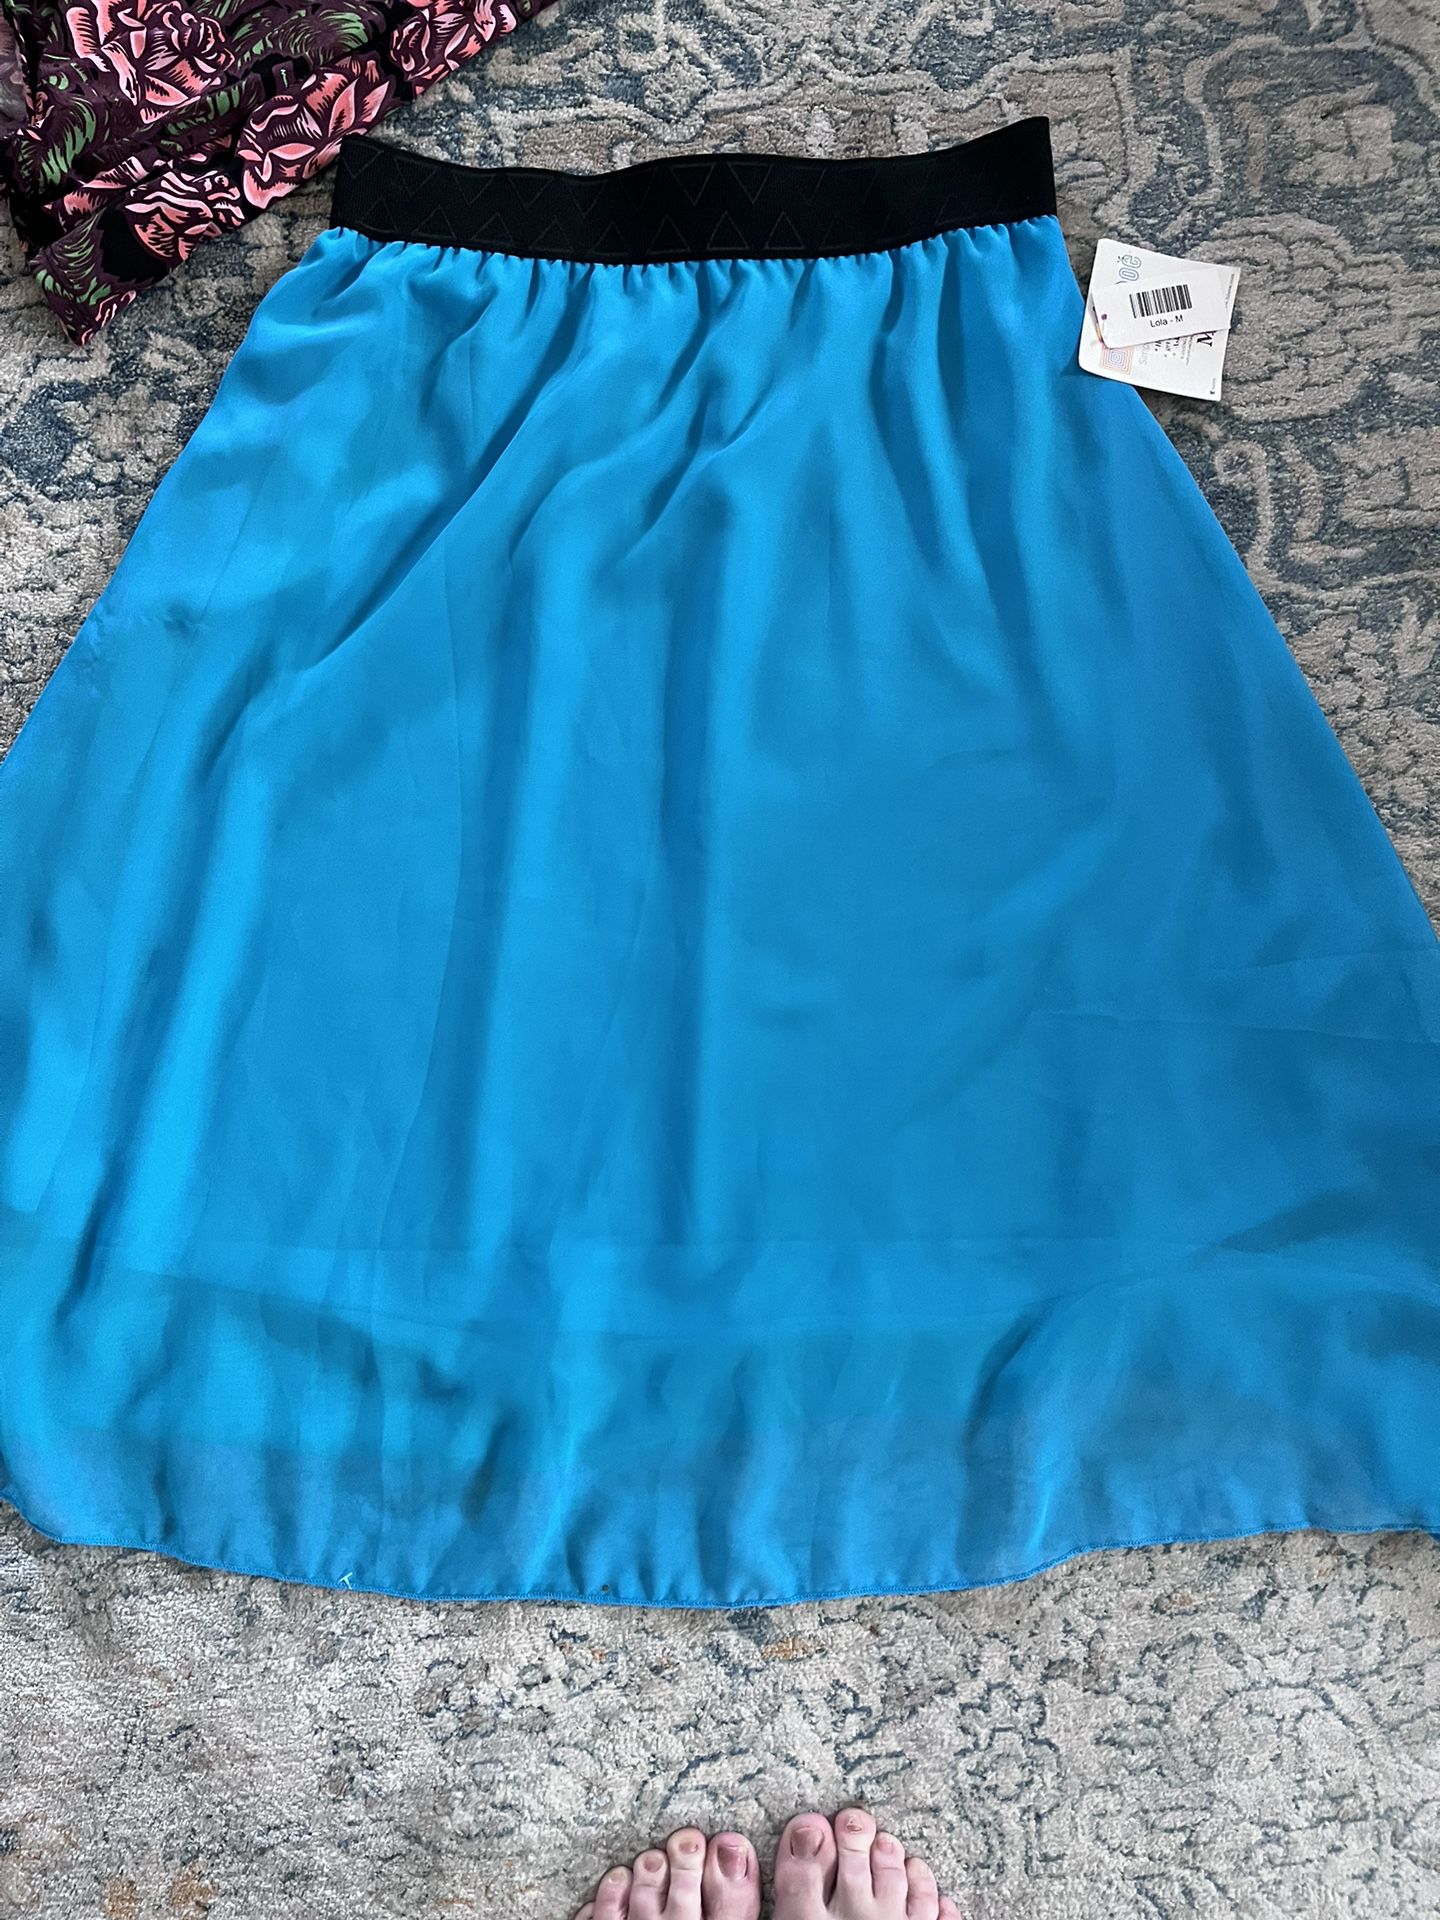 Four LuluRoe Skirts-Never Worn- $50 for all. 